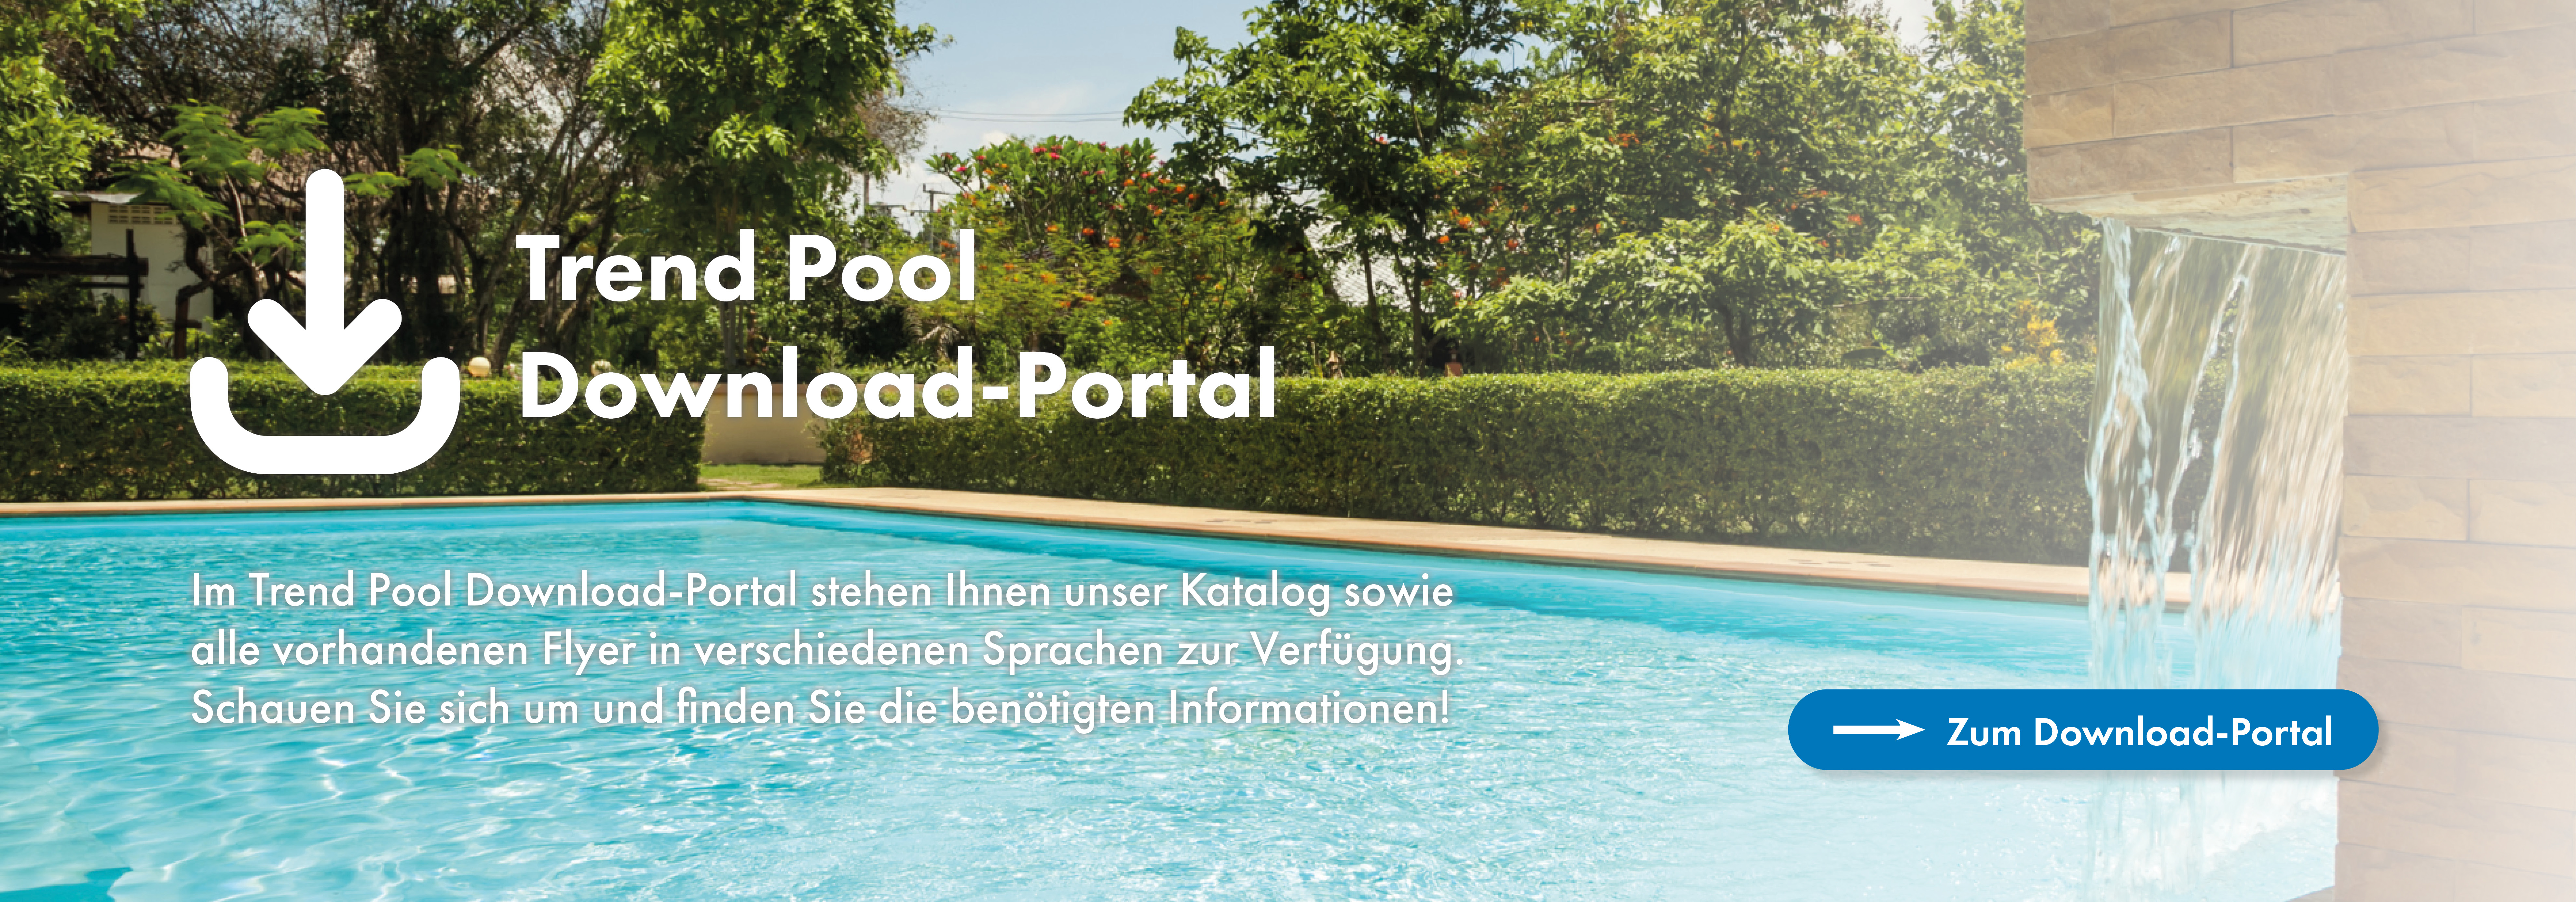 trend-pool-download-portal